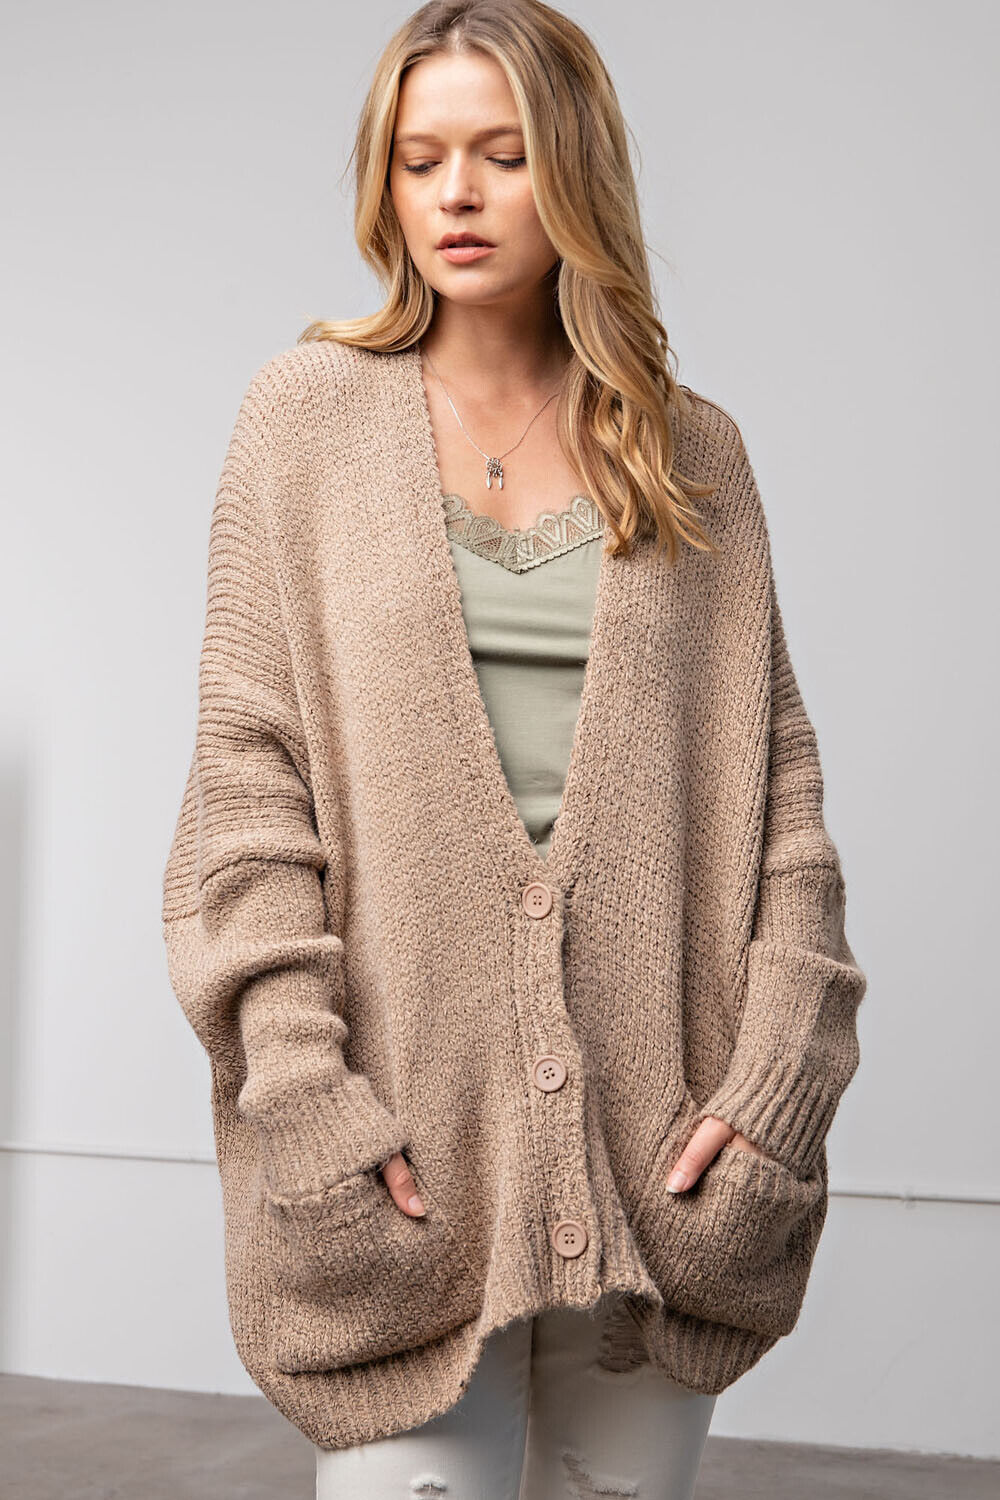 Easel Khaki Tan Slouchy Knit Cardigan Sweater Soft Oversized New S-L  ET21418 | eBay